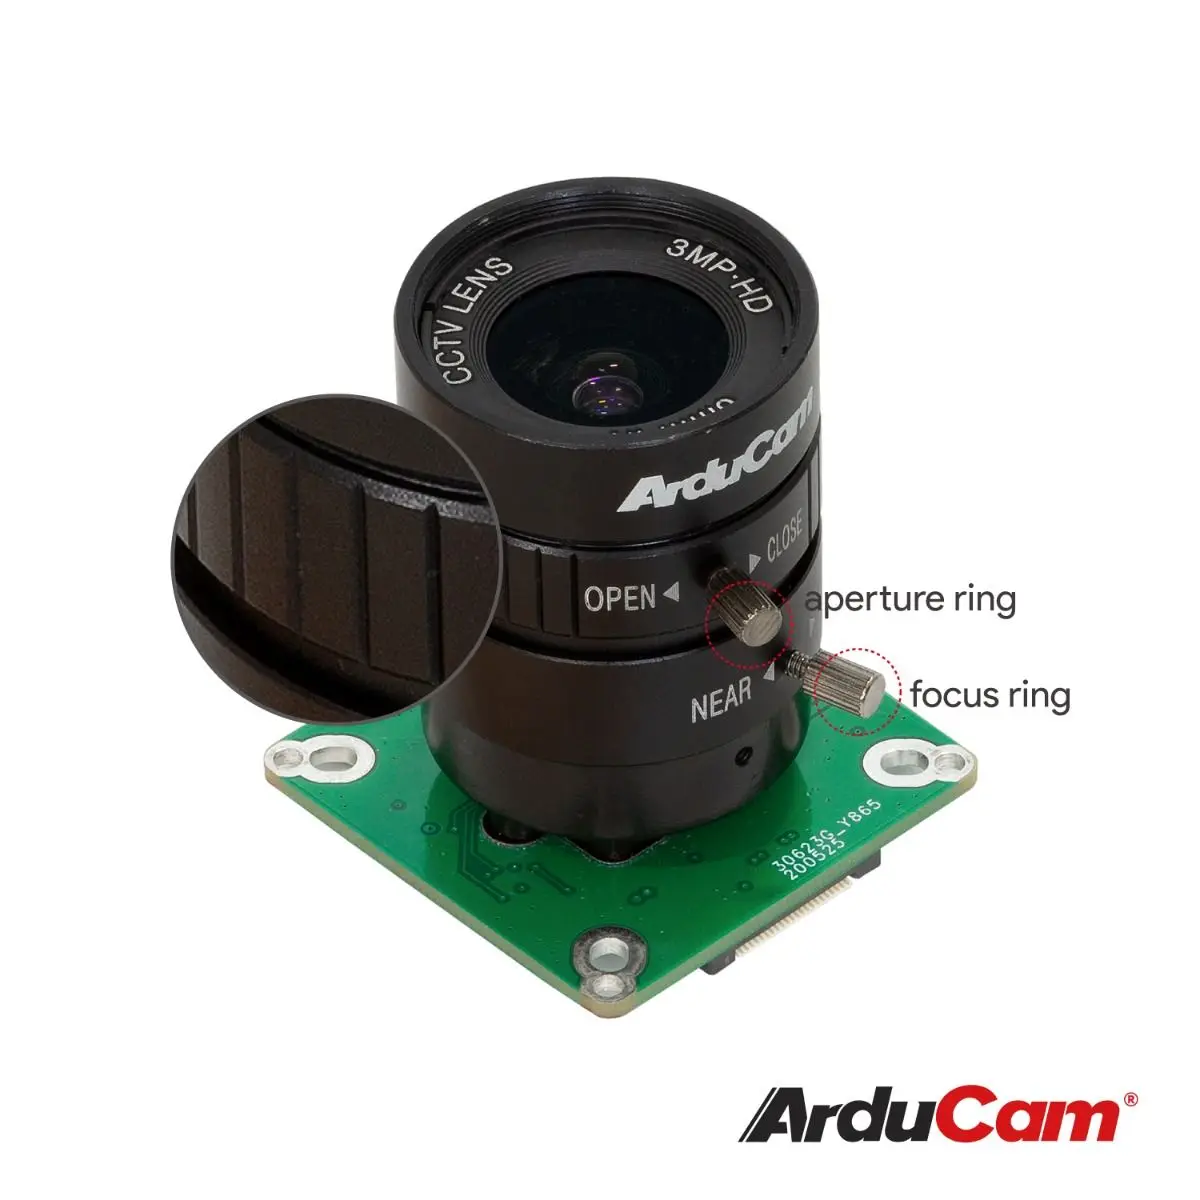 

Arducam High Quality Camera for Raspberry Pi, 12.3MP 1/2.3 Inch IMX477 HQ Camera Module with 6mm CS Lens for Pi 4B, 3B+, 2B, 3A+